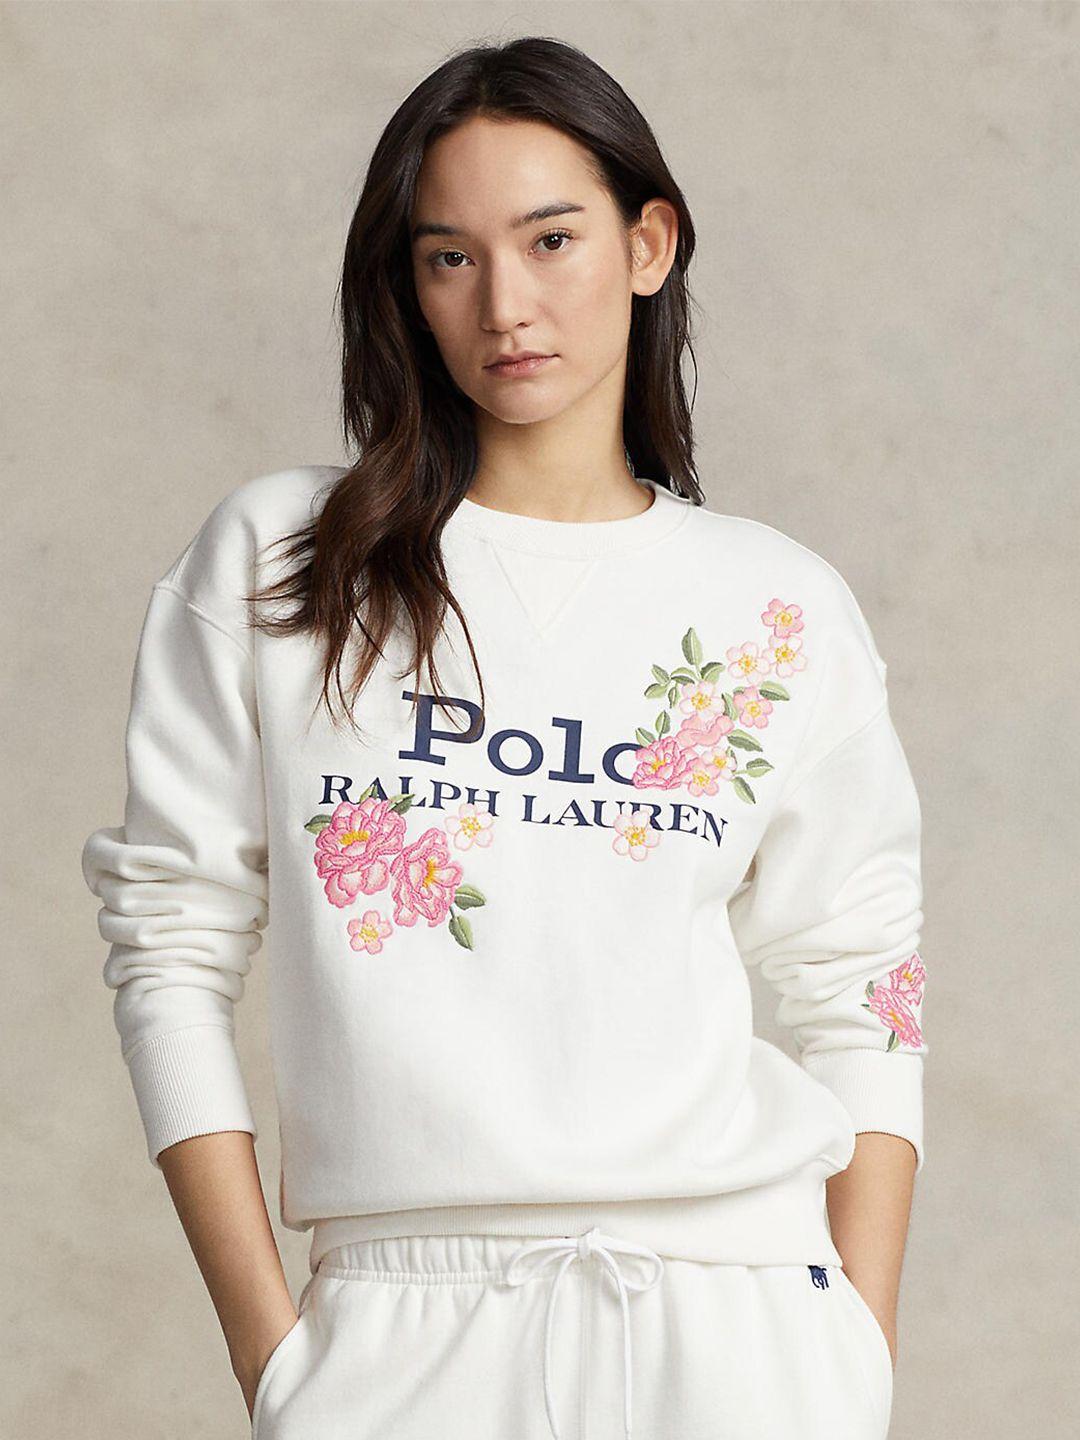 polo ralph lauren women floral printed sweatshirts